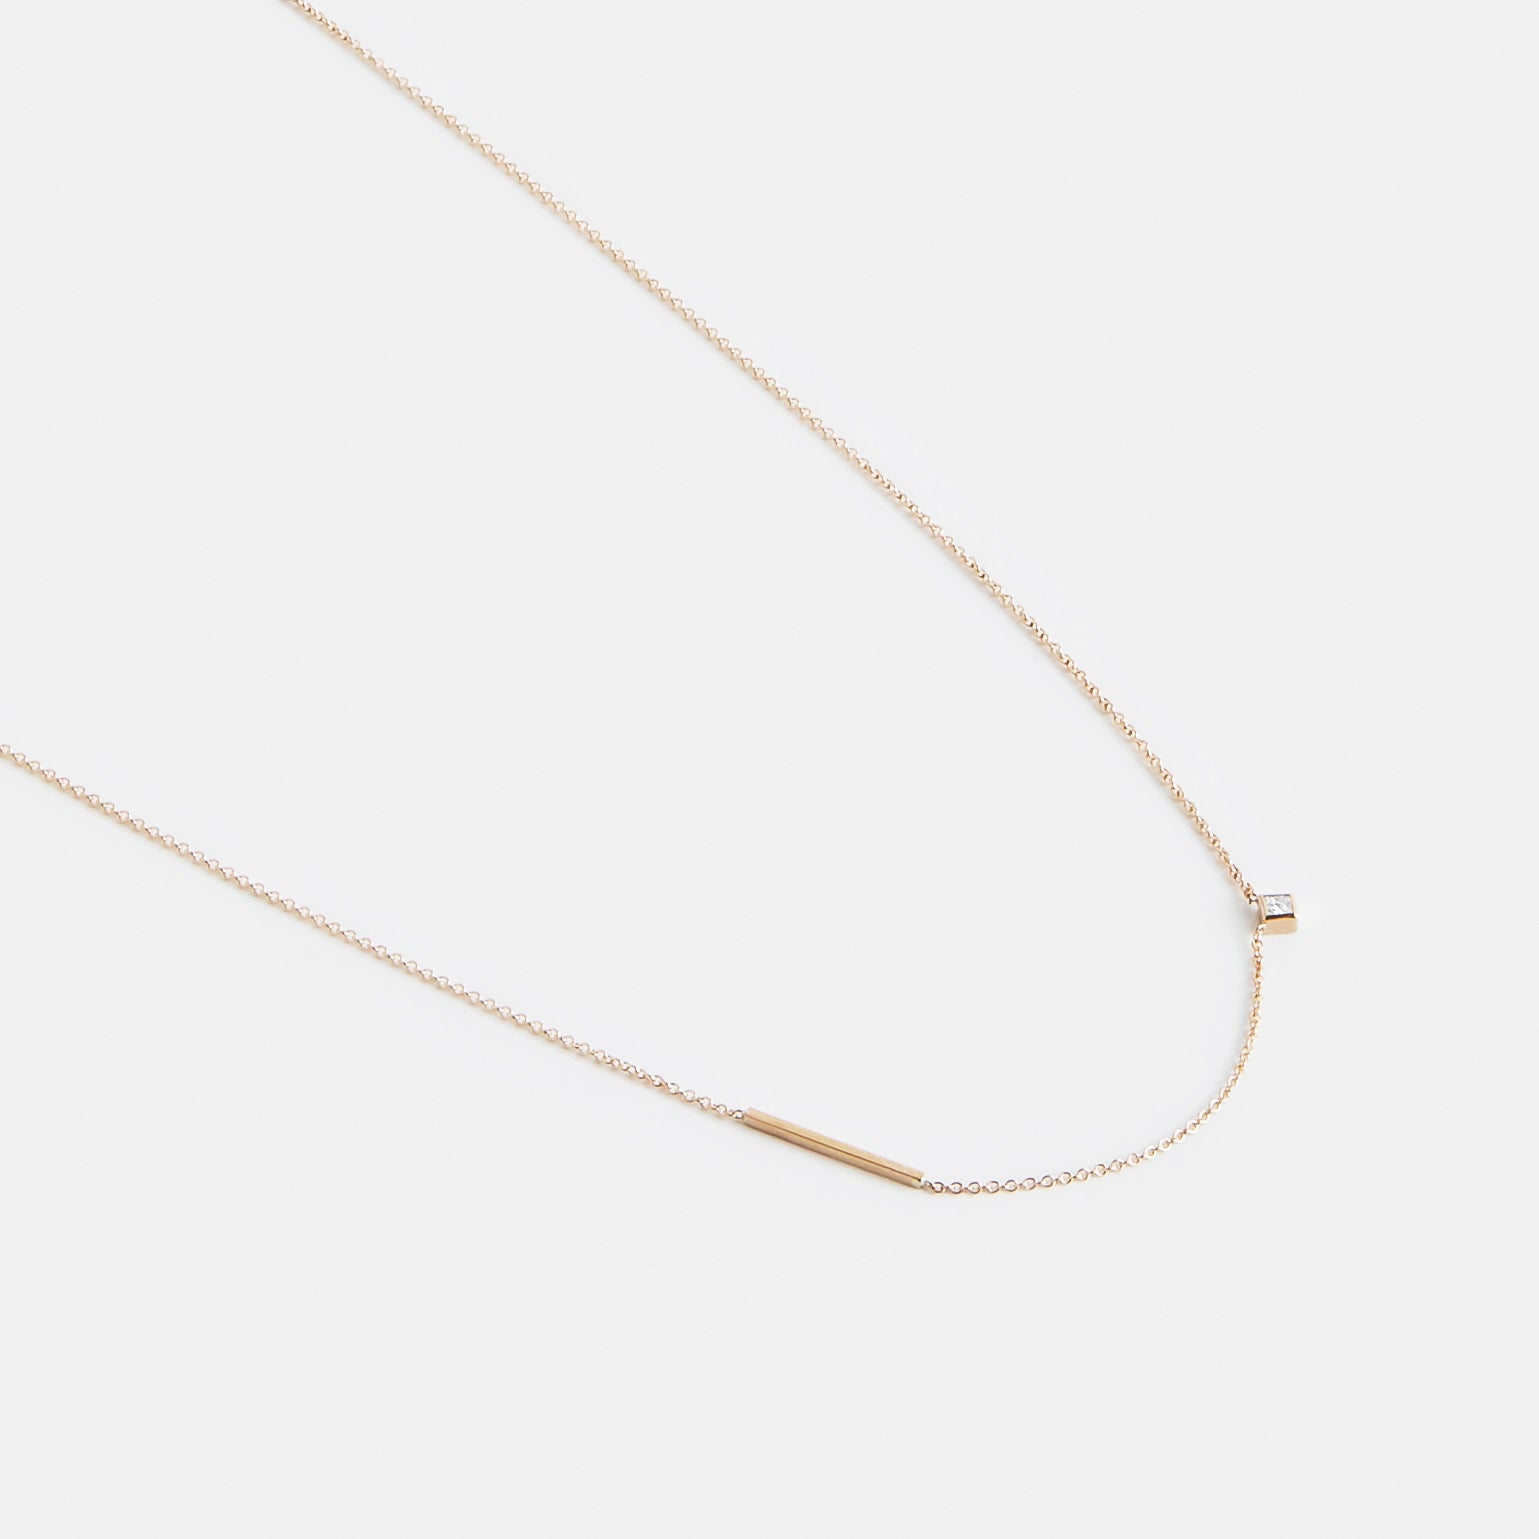 Inu Alternative Necklace in 14k Gold Set with White Diamond By SHW Fine Jewelry NYC